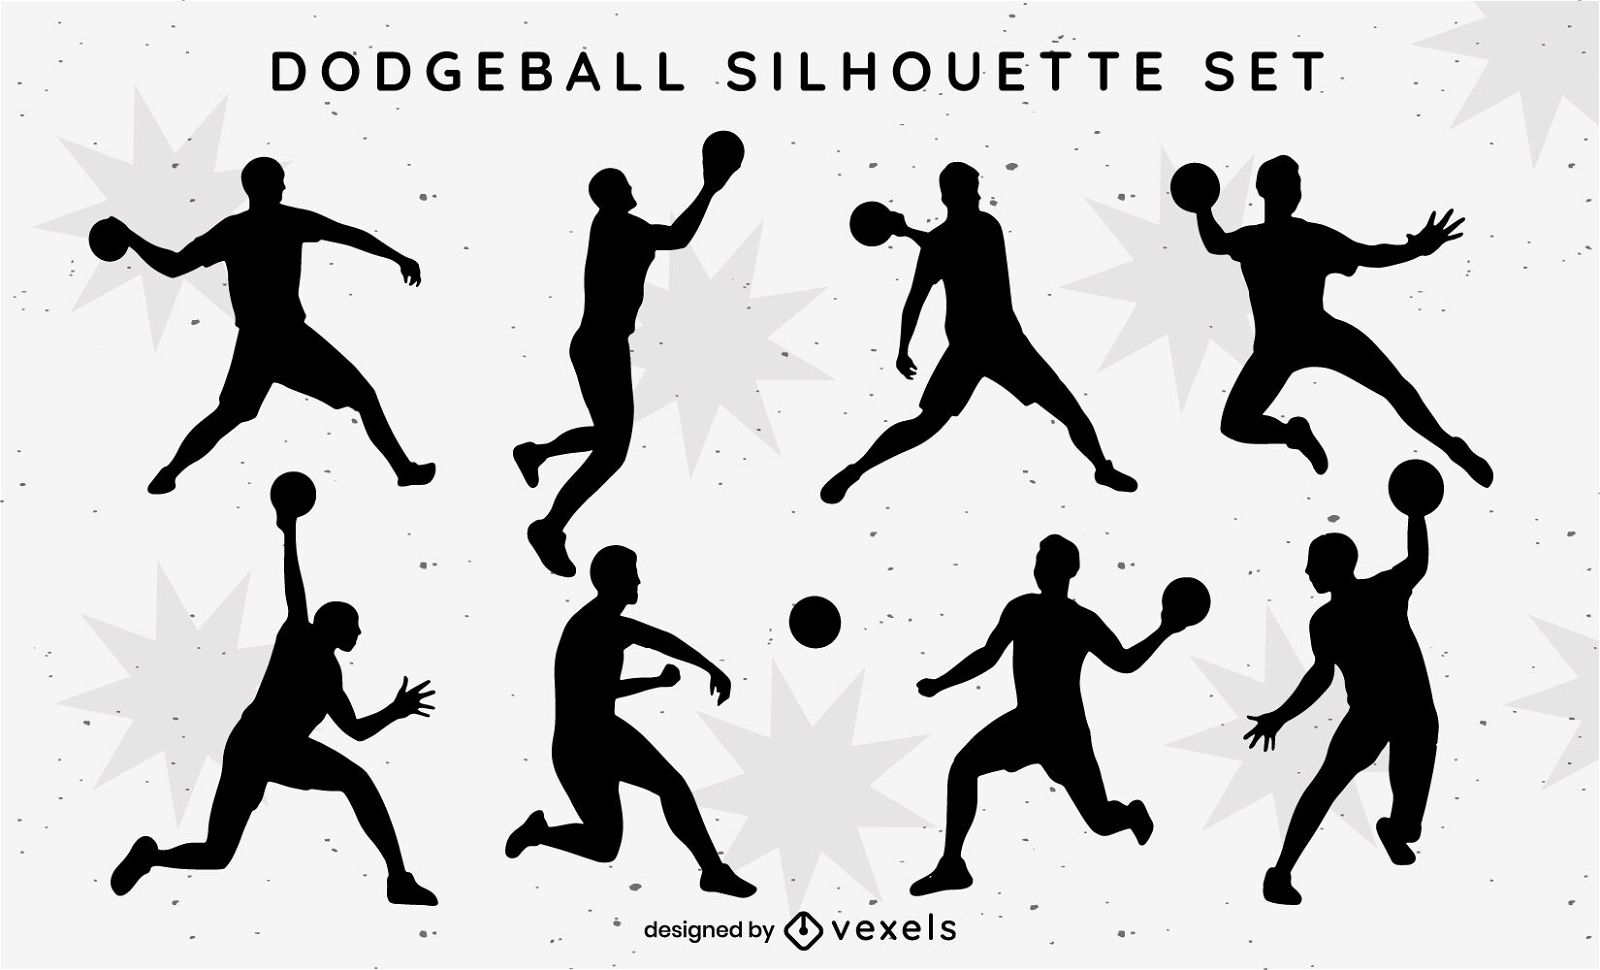 Dodgeball players silhouette set